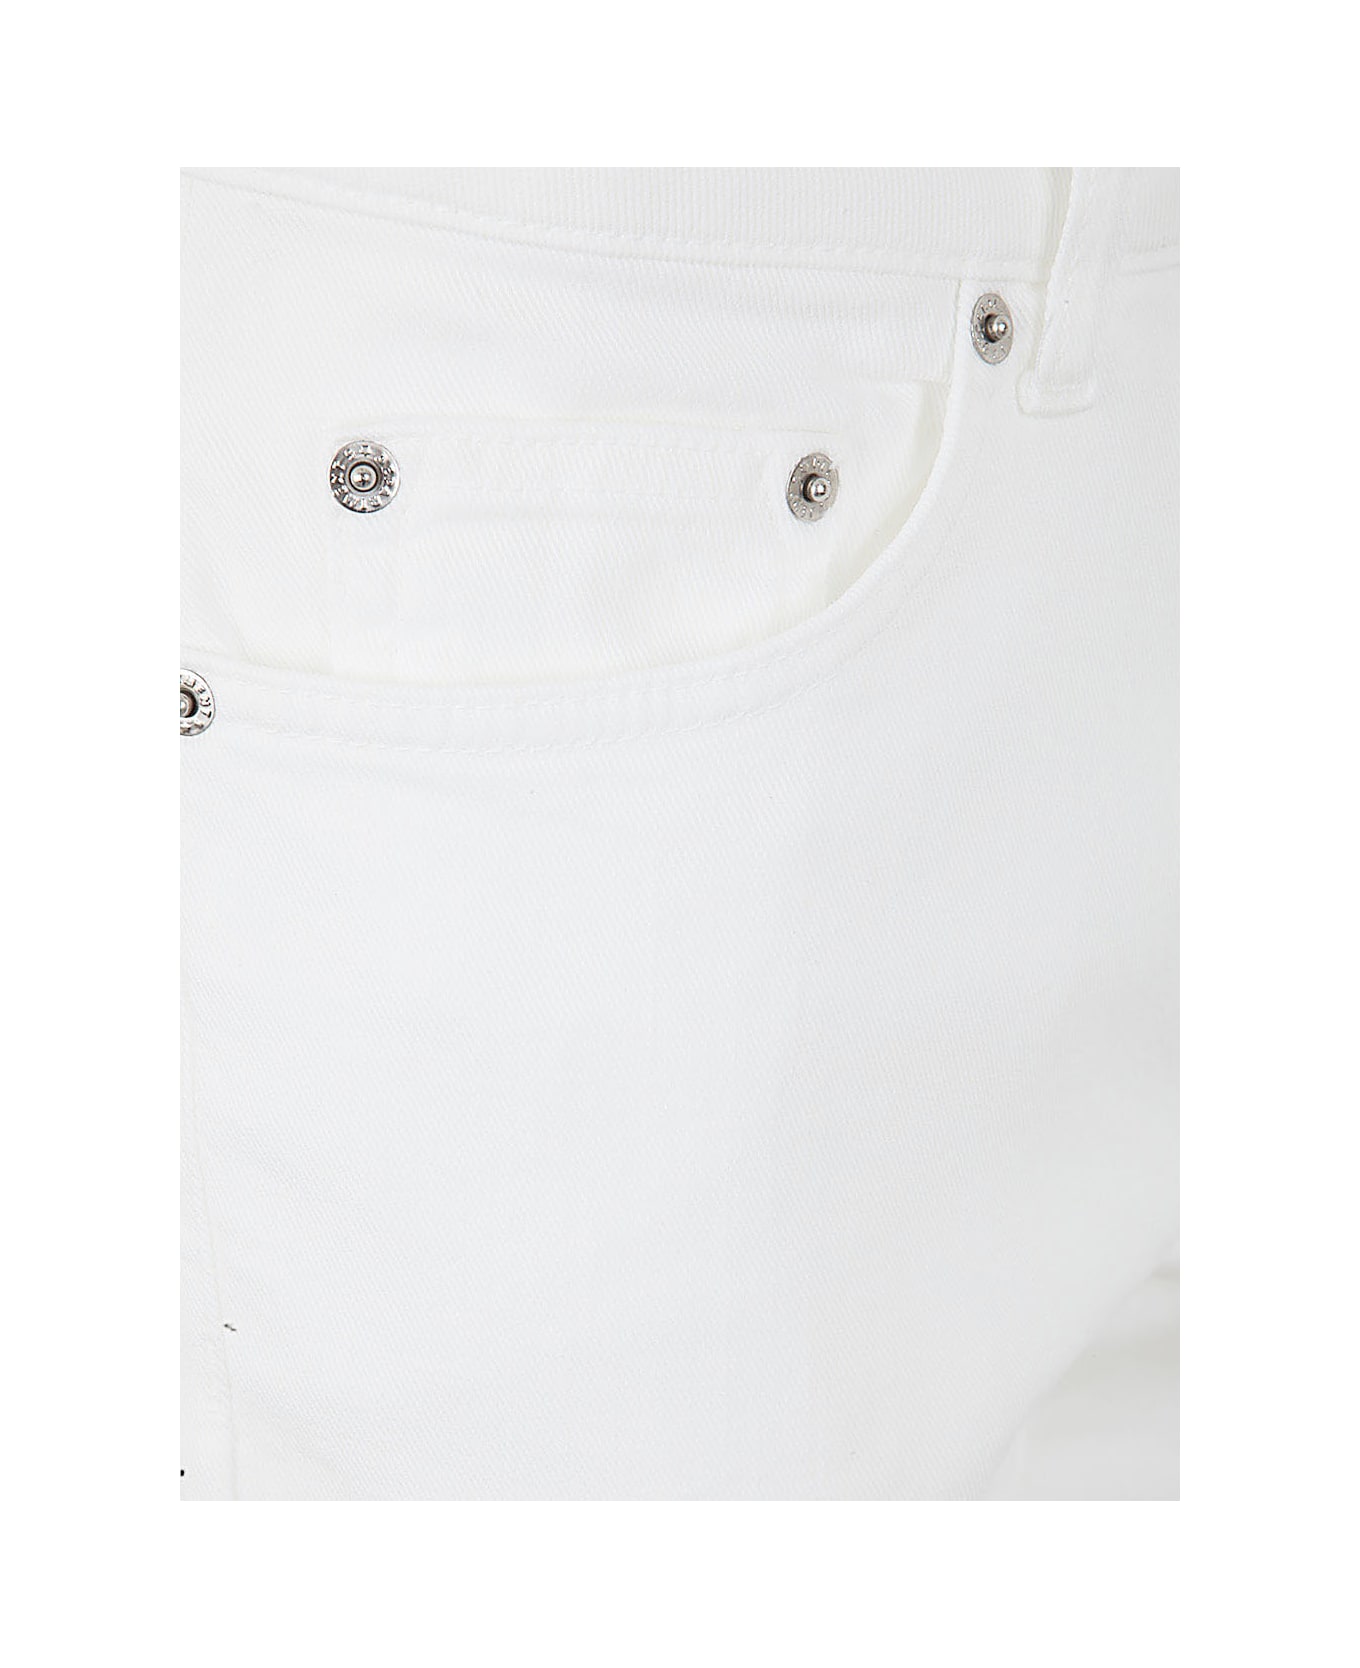 Department Five Drake Jeans - White